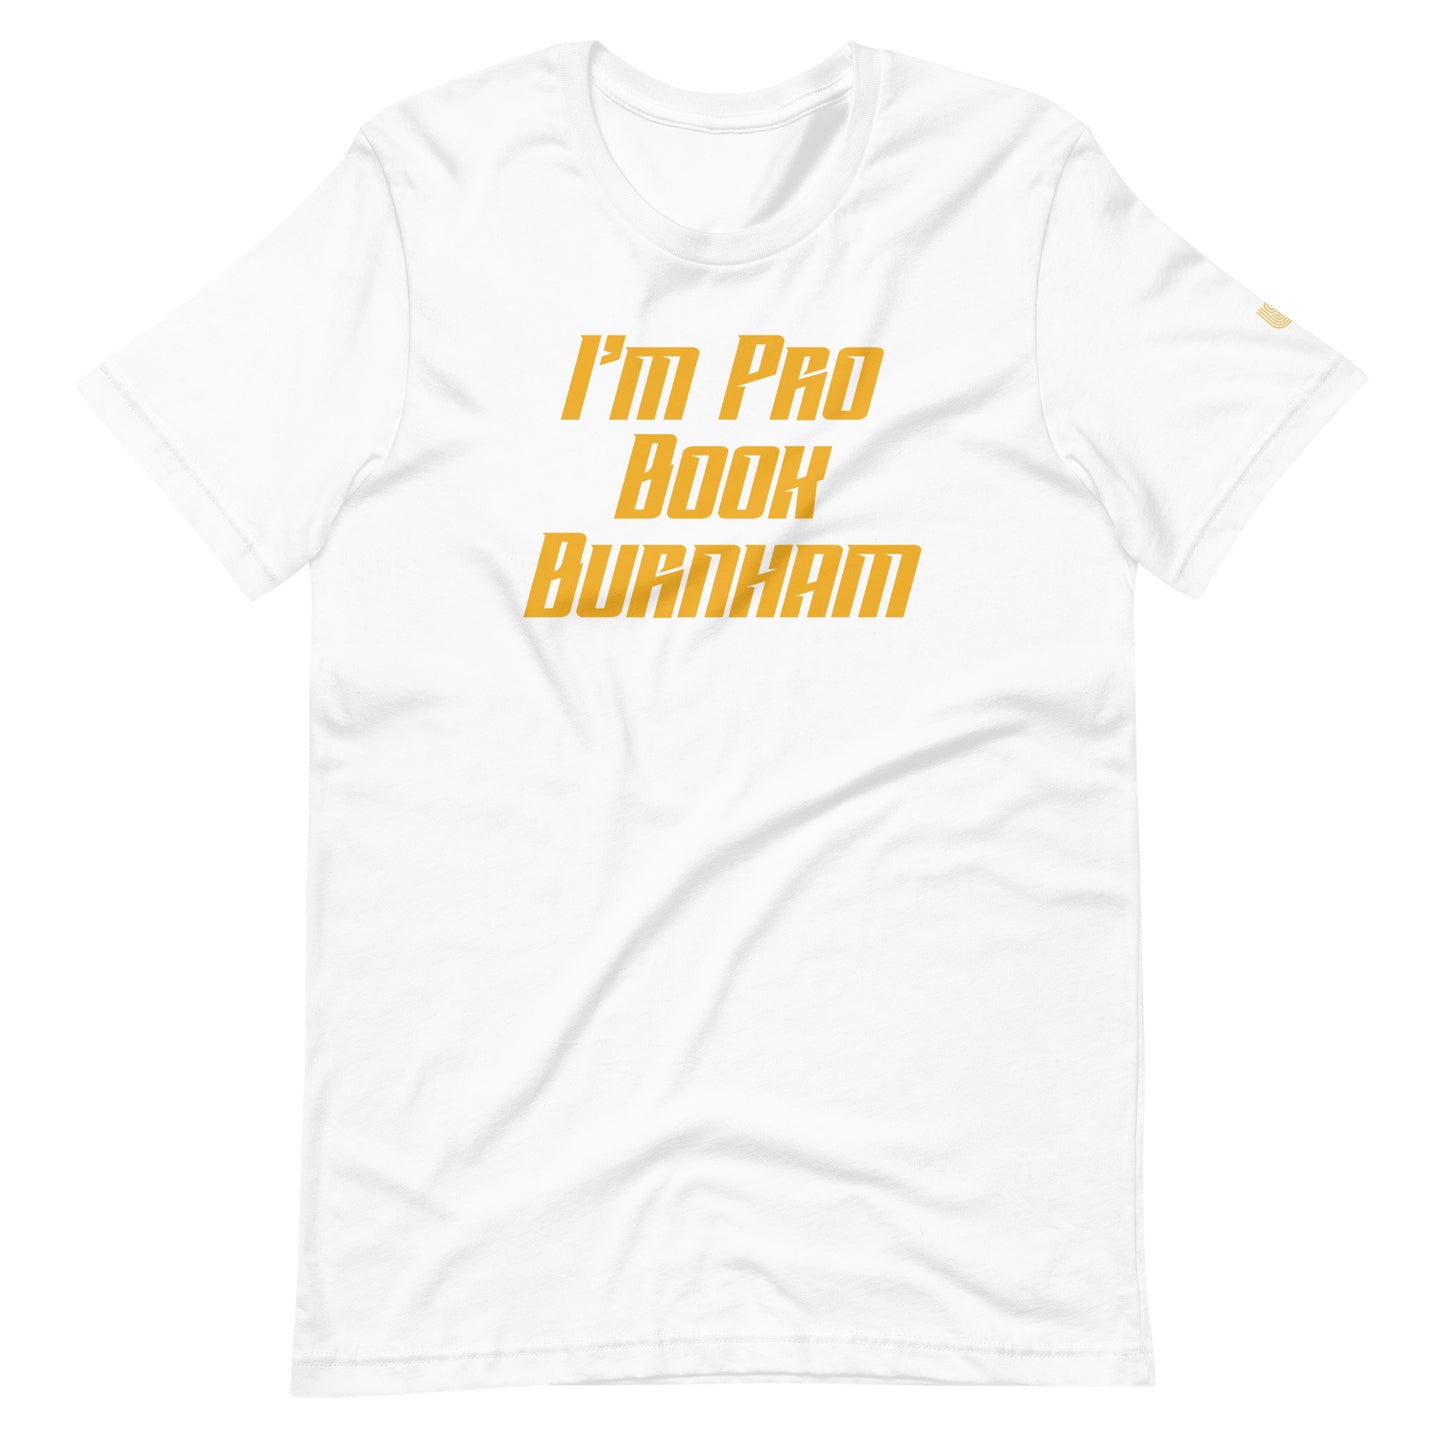 Book Burnham T-Shirt